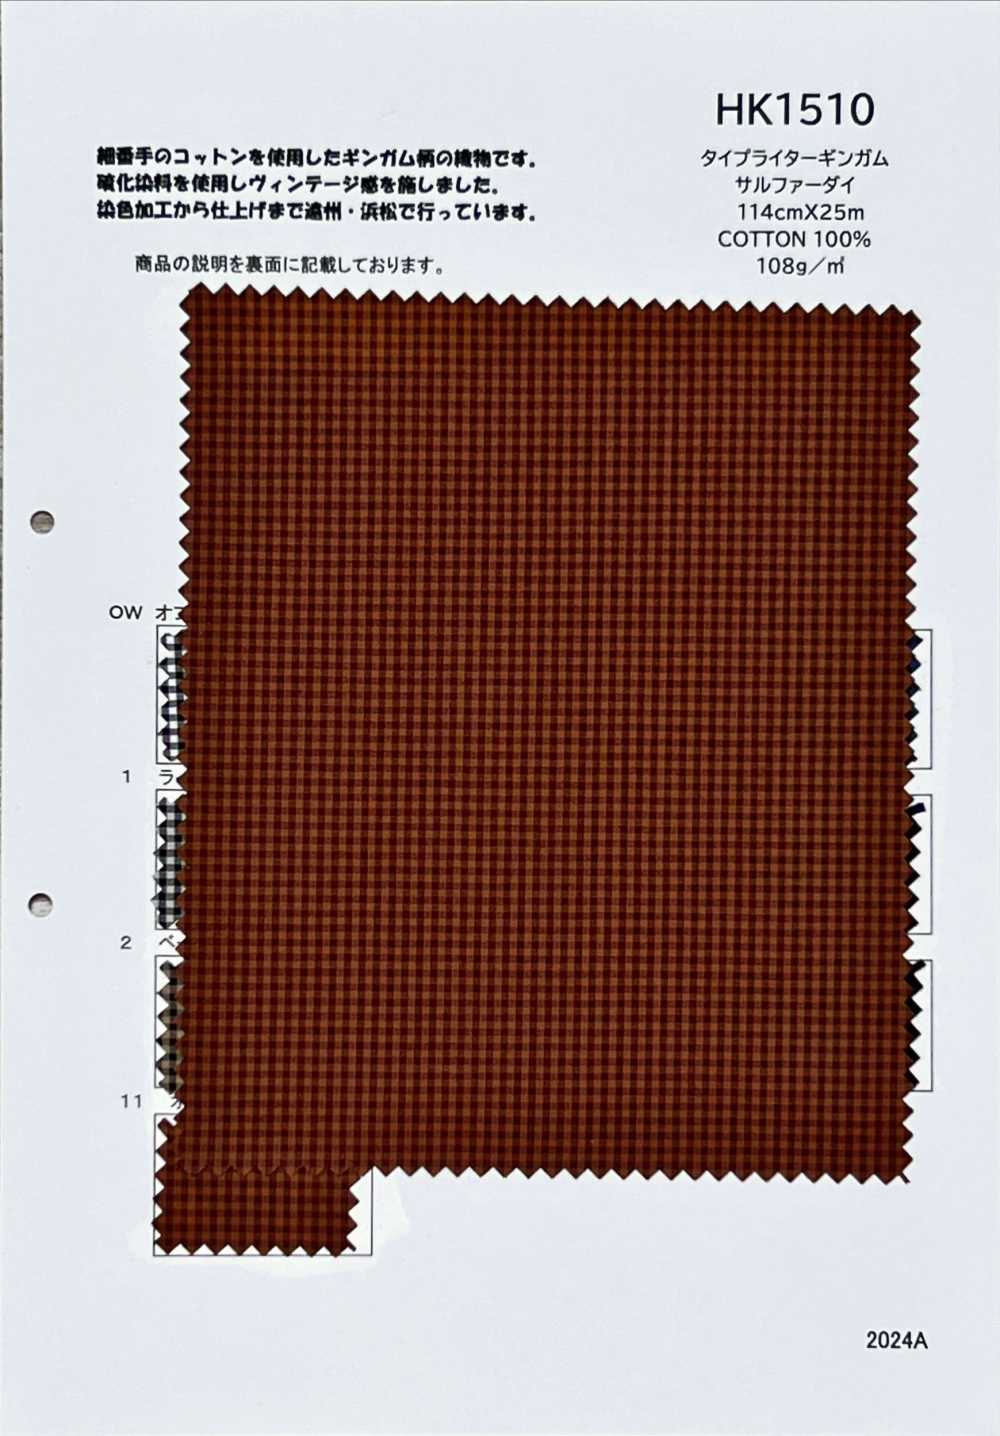 HK1510 Typewritter Cloth Gingham Sulfur Dye[Textile / Fabric] KOYAMA